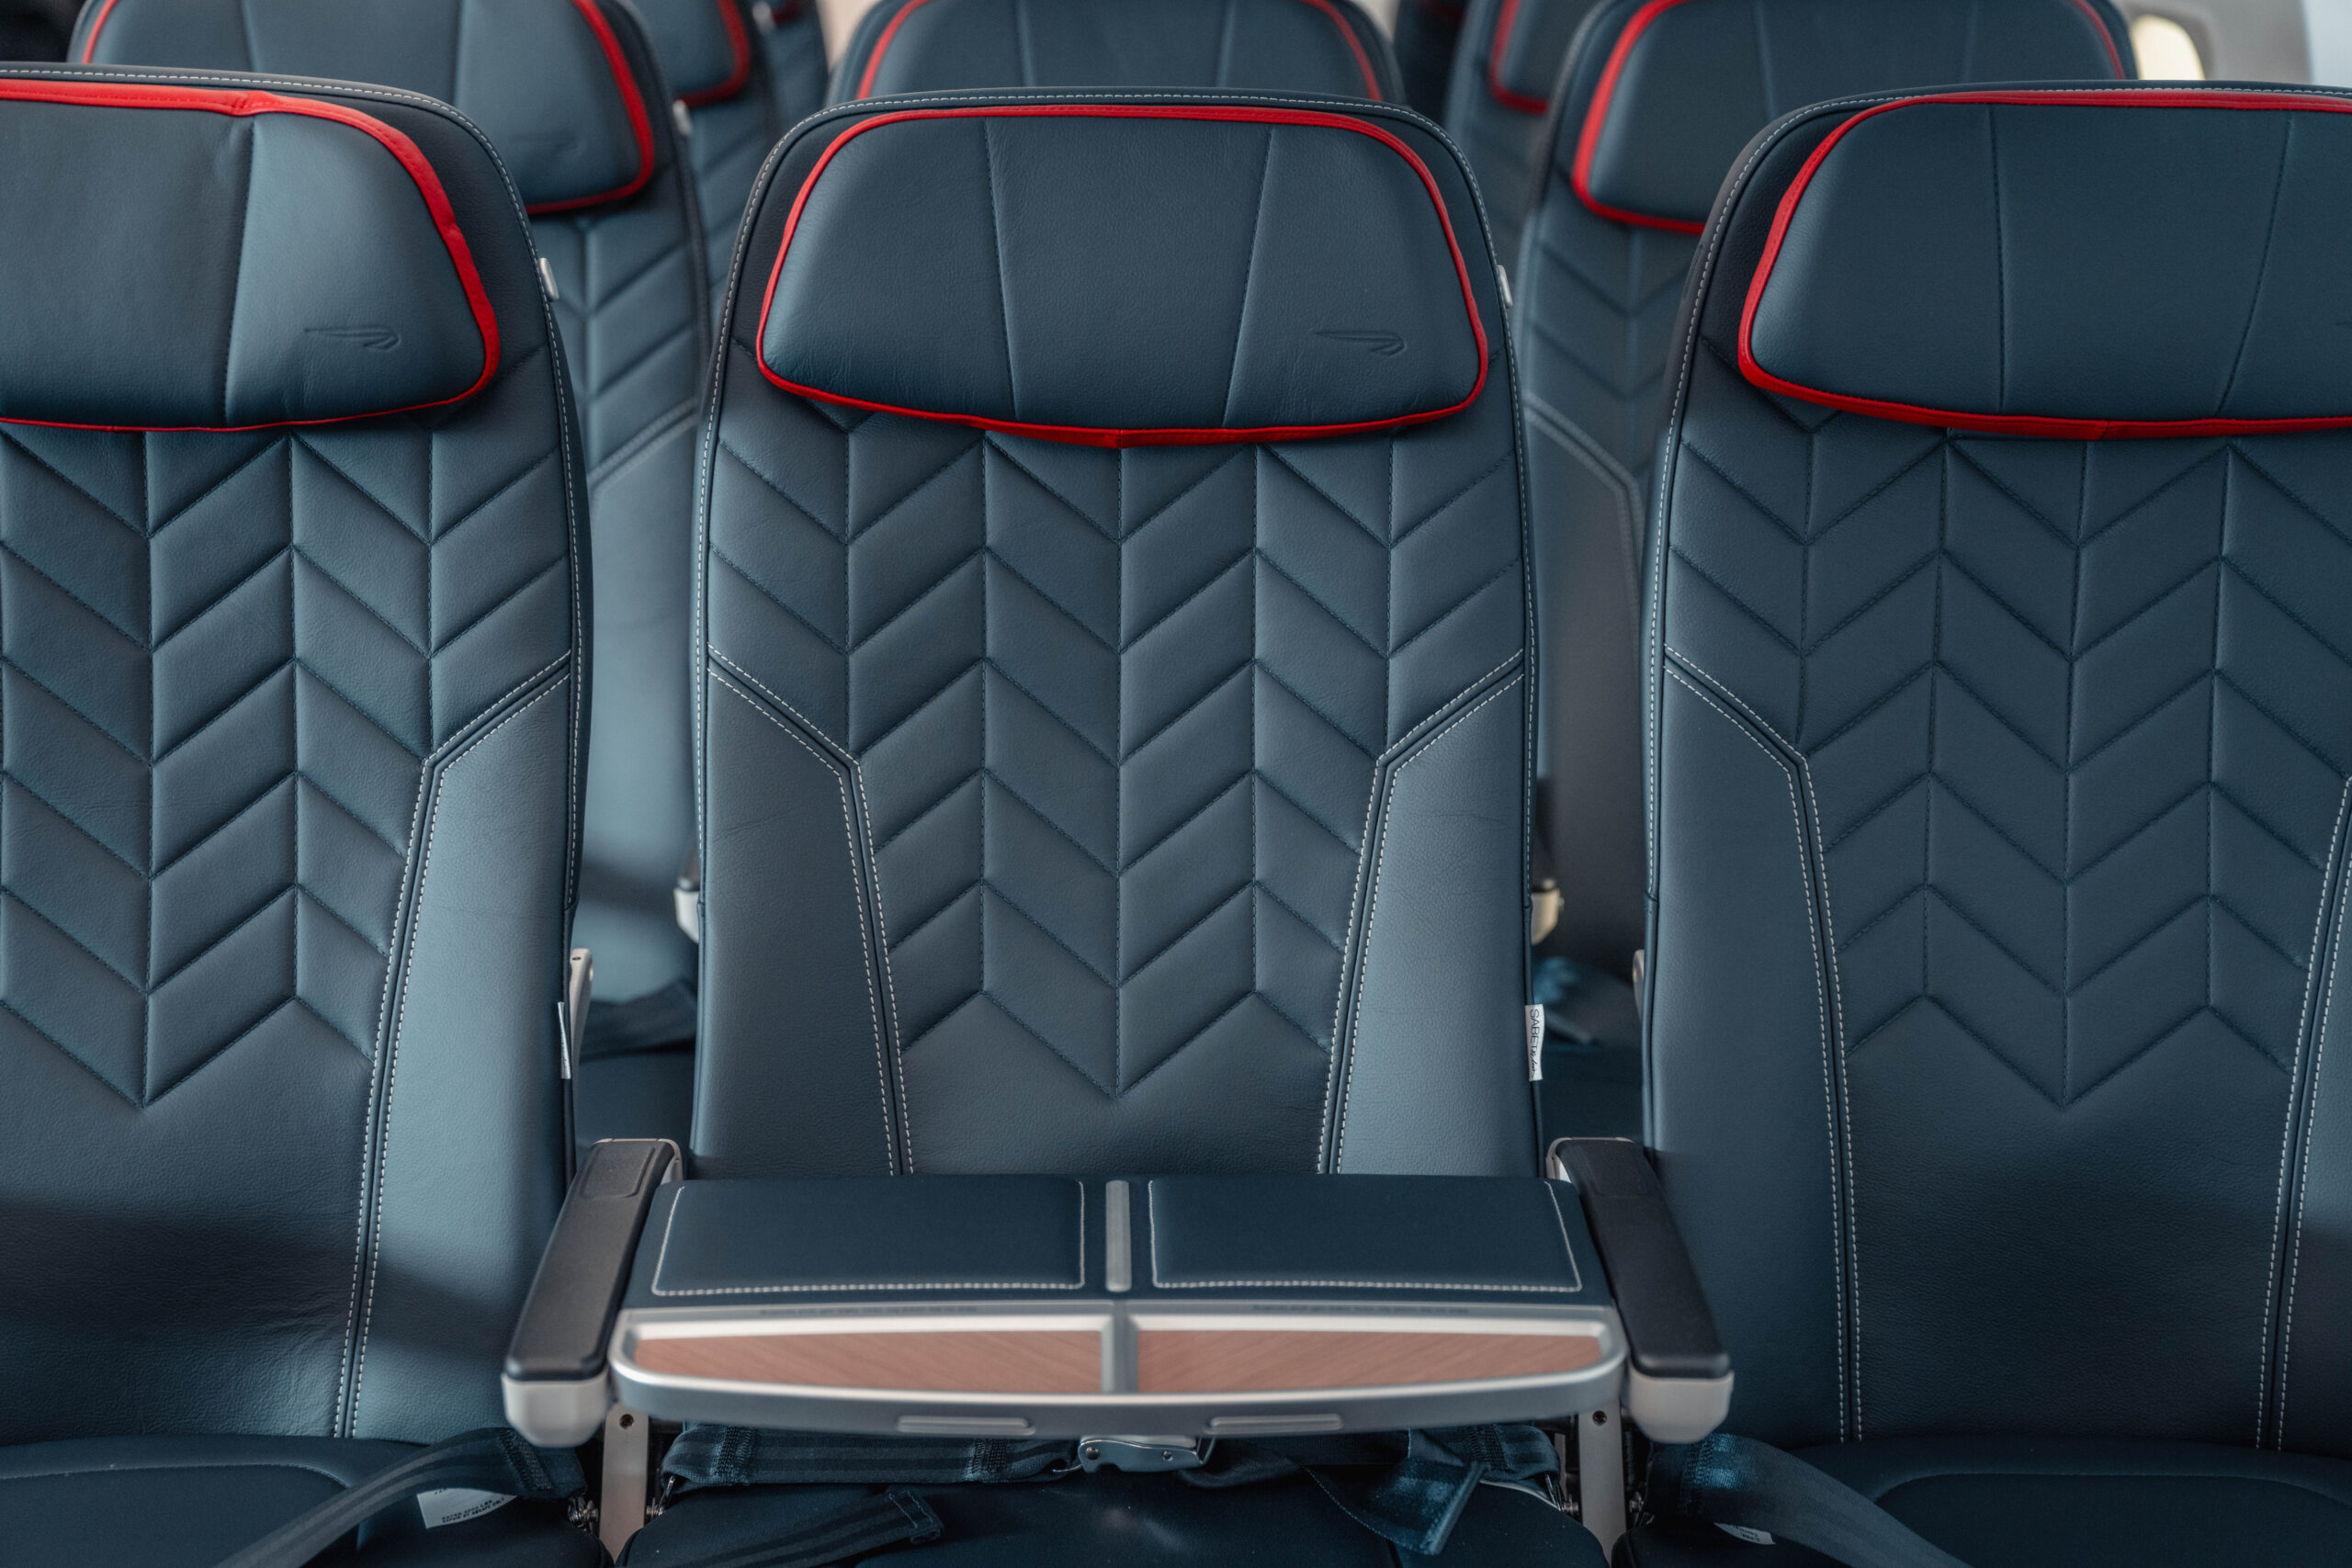 British Airways' new short-haul seat